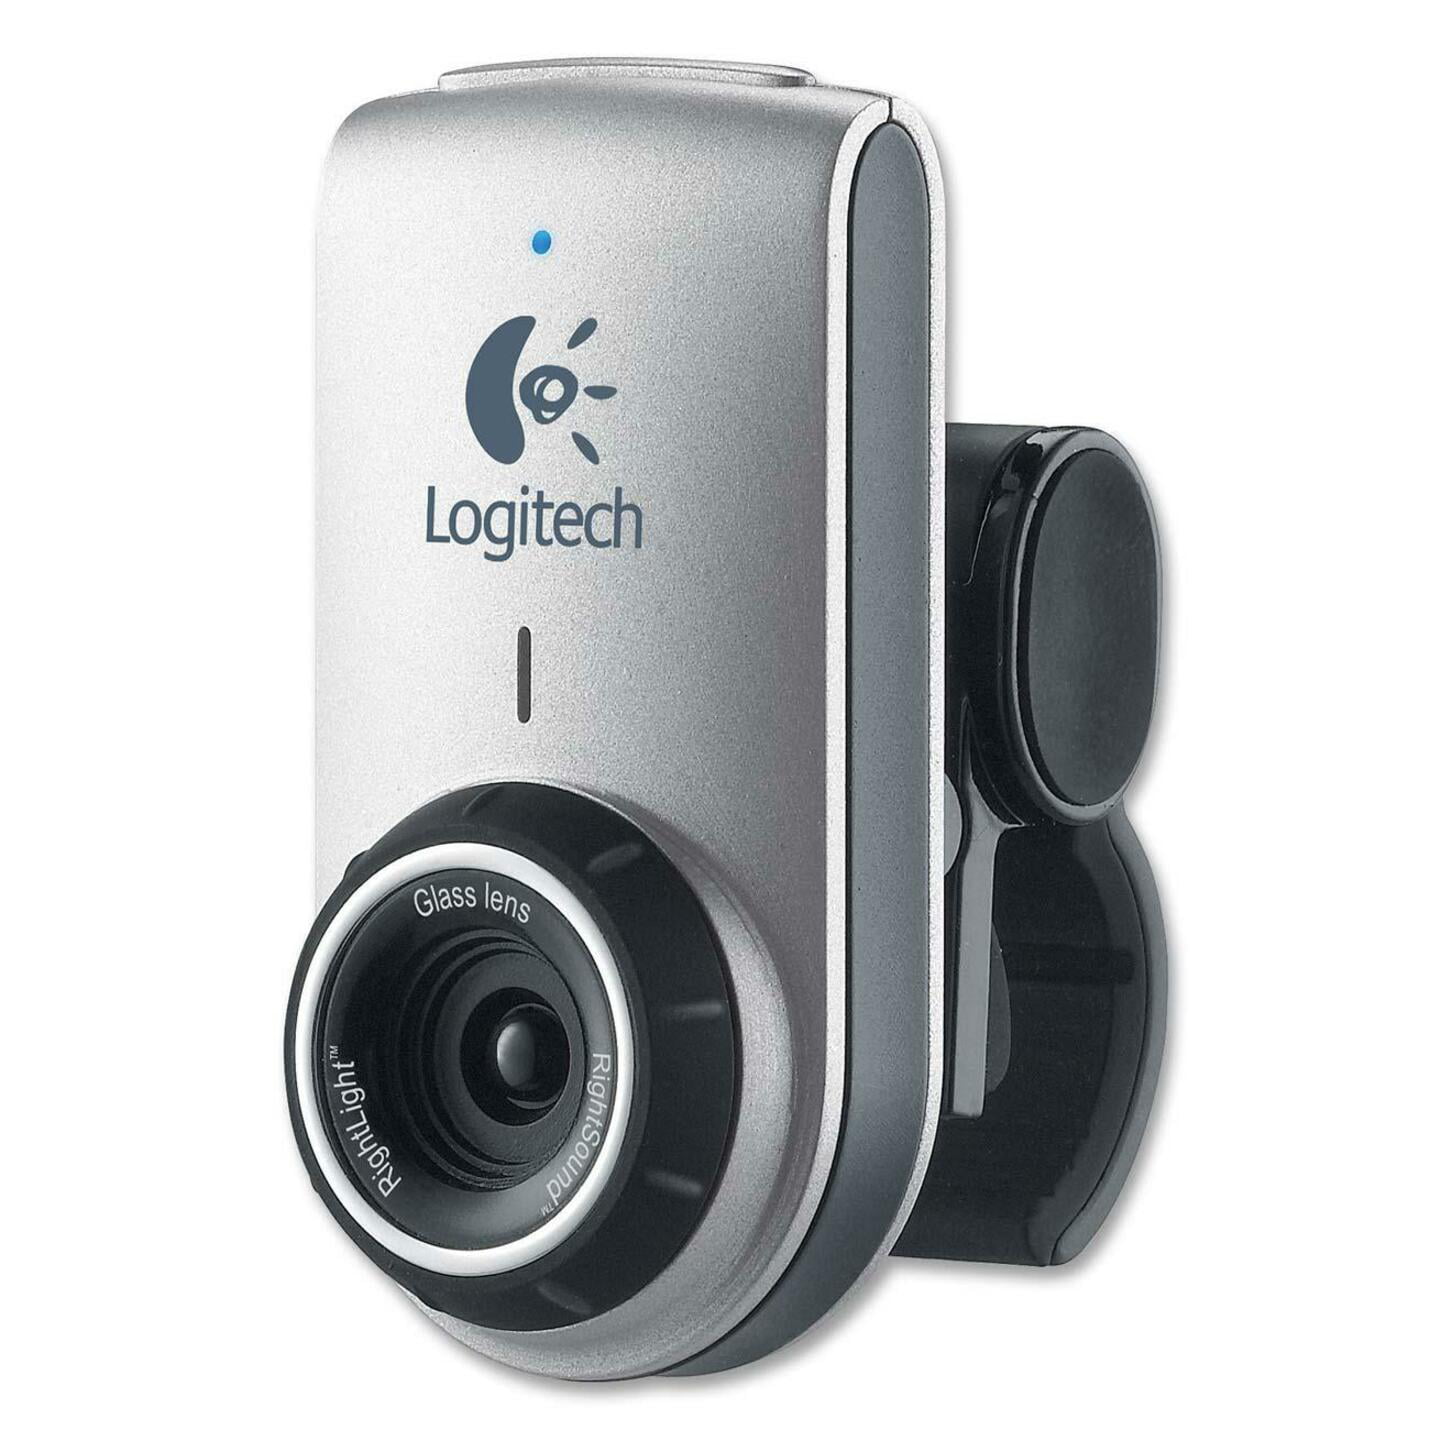 Dømme Tredive binde Logitech QuickCam Webcam, 1.3 Megapixel, 30 fps, Silver, Black, USB -  Walmart.com